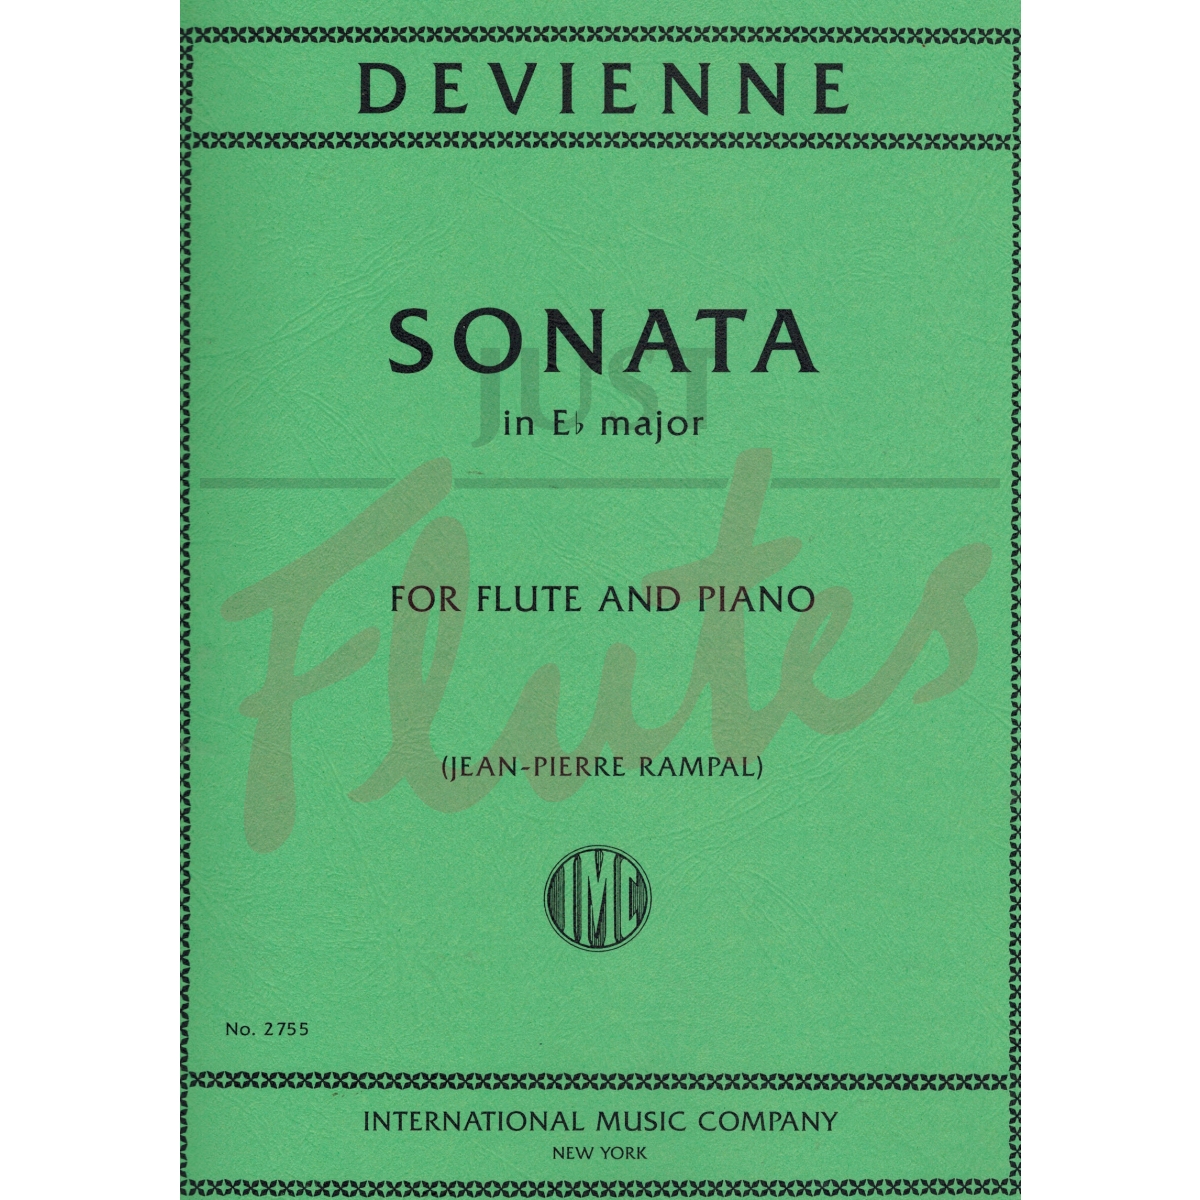 Sonata in E flat major